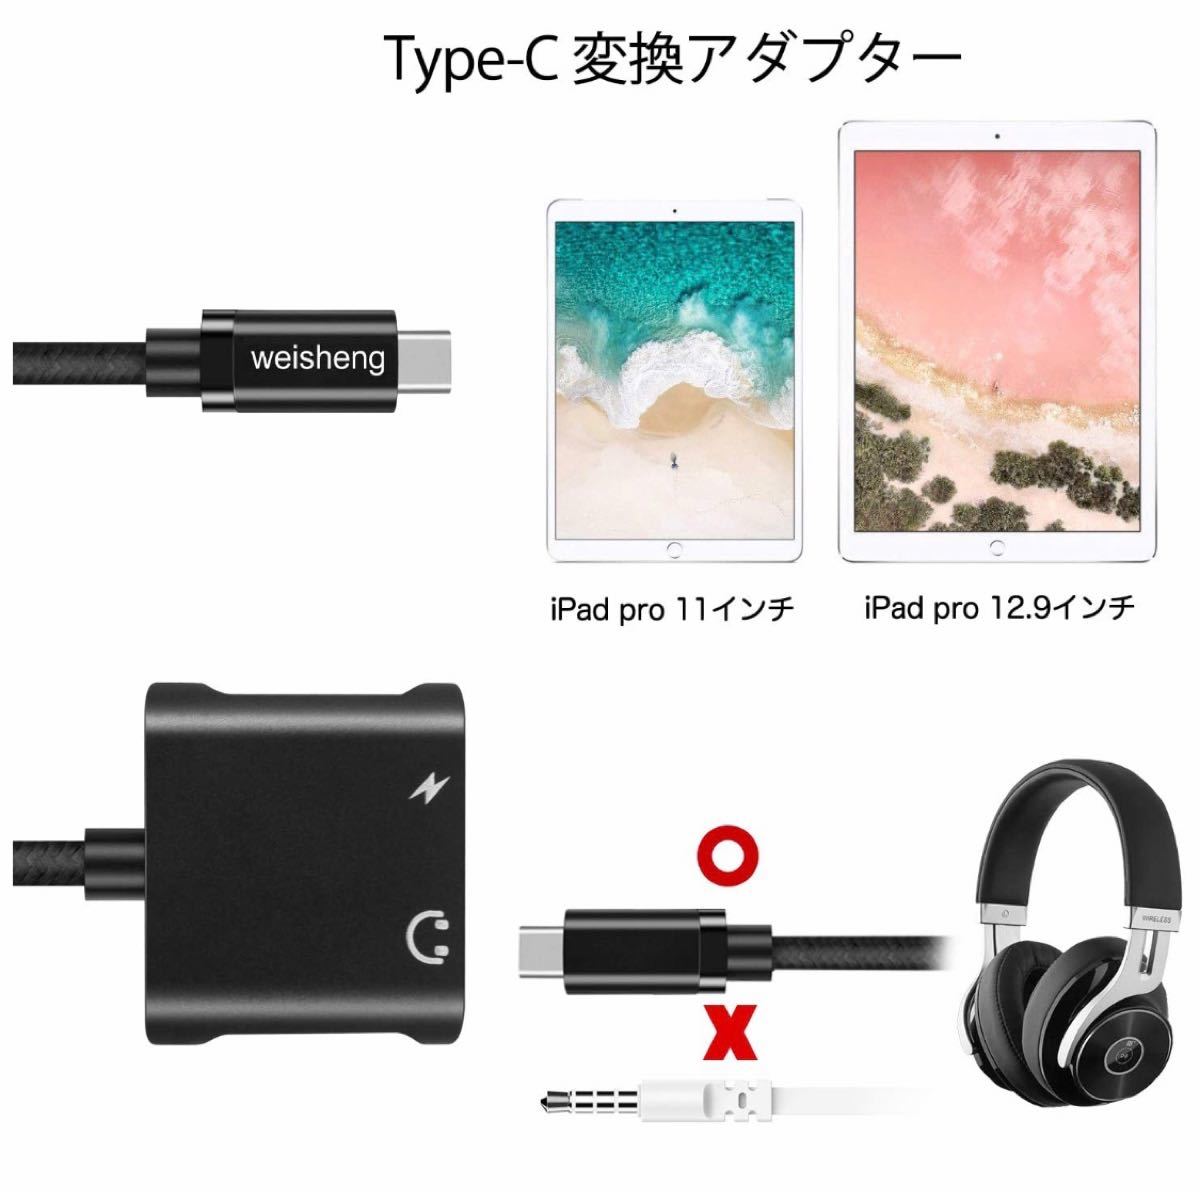 USB Type-C to Type-Cイヤホン 変換ケーブル 2 in 1